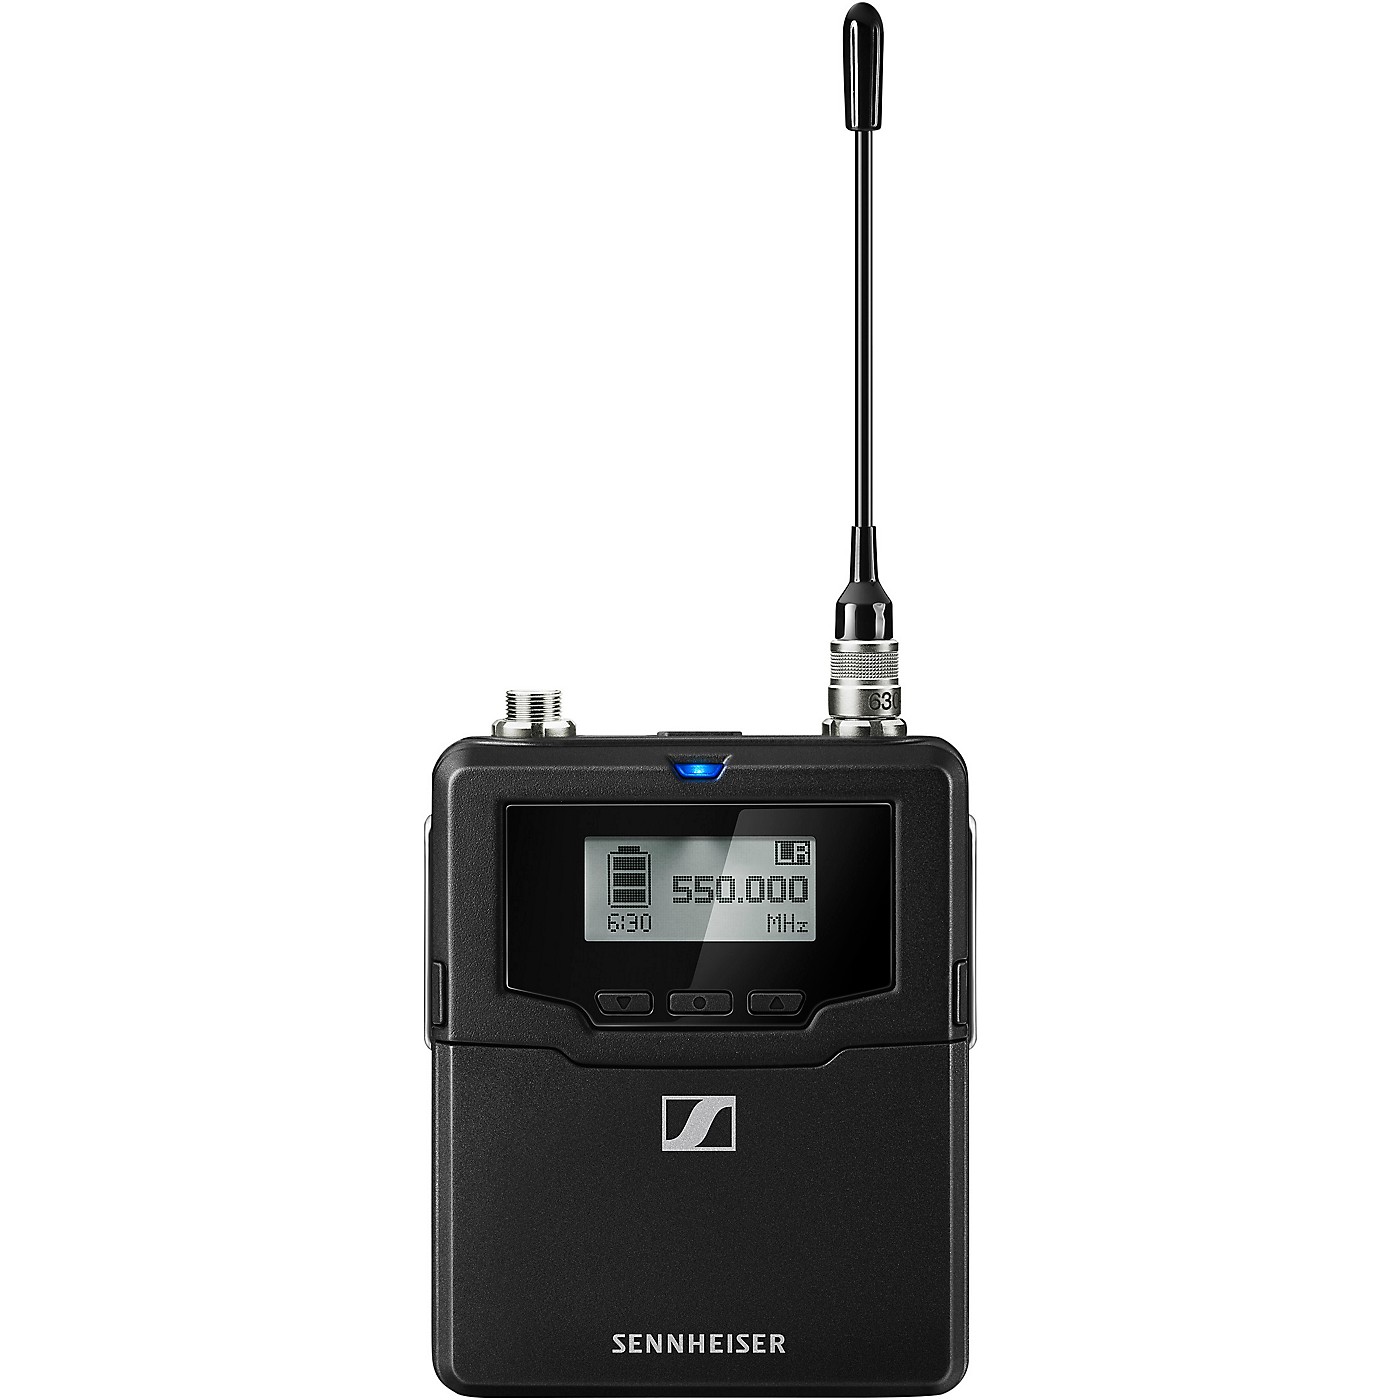 Sennheiser SK 6000 BK A5-A8 US Digital Bodypack Transmitter  (550-607mHz, 614-638mHz) thumbnail